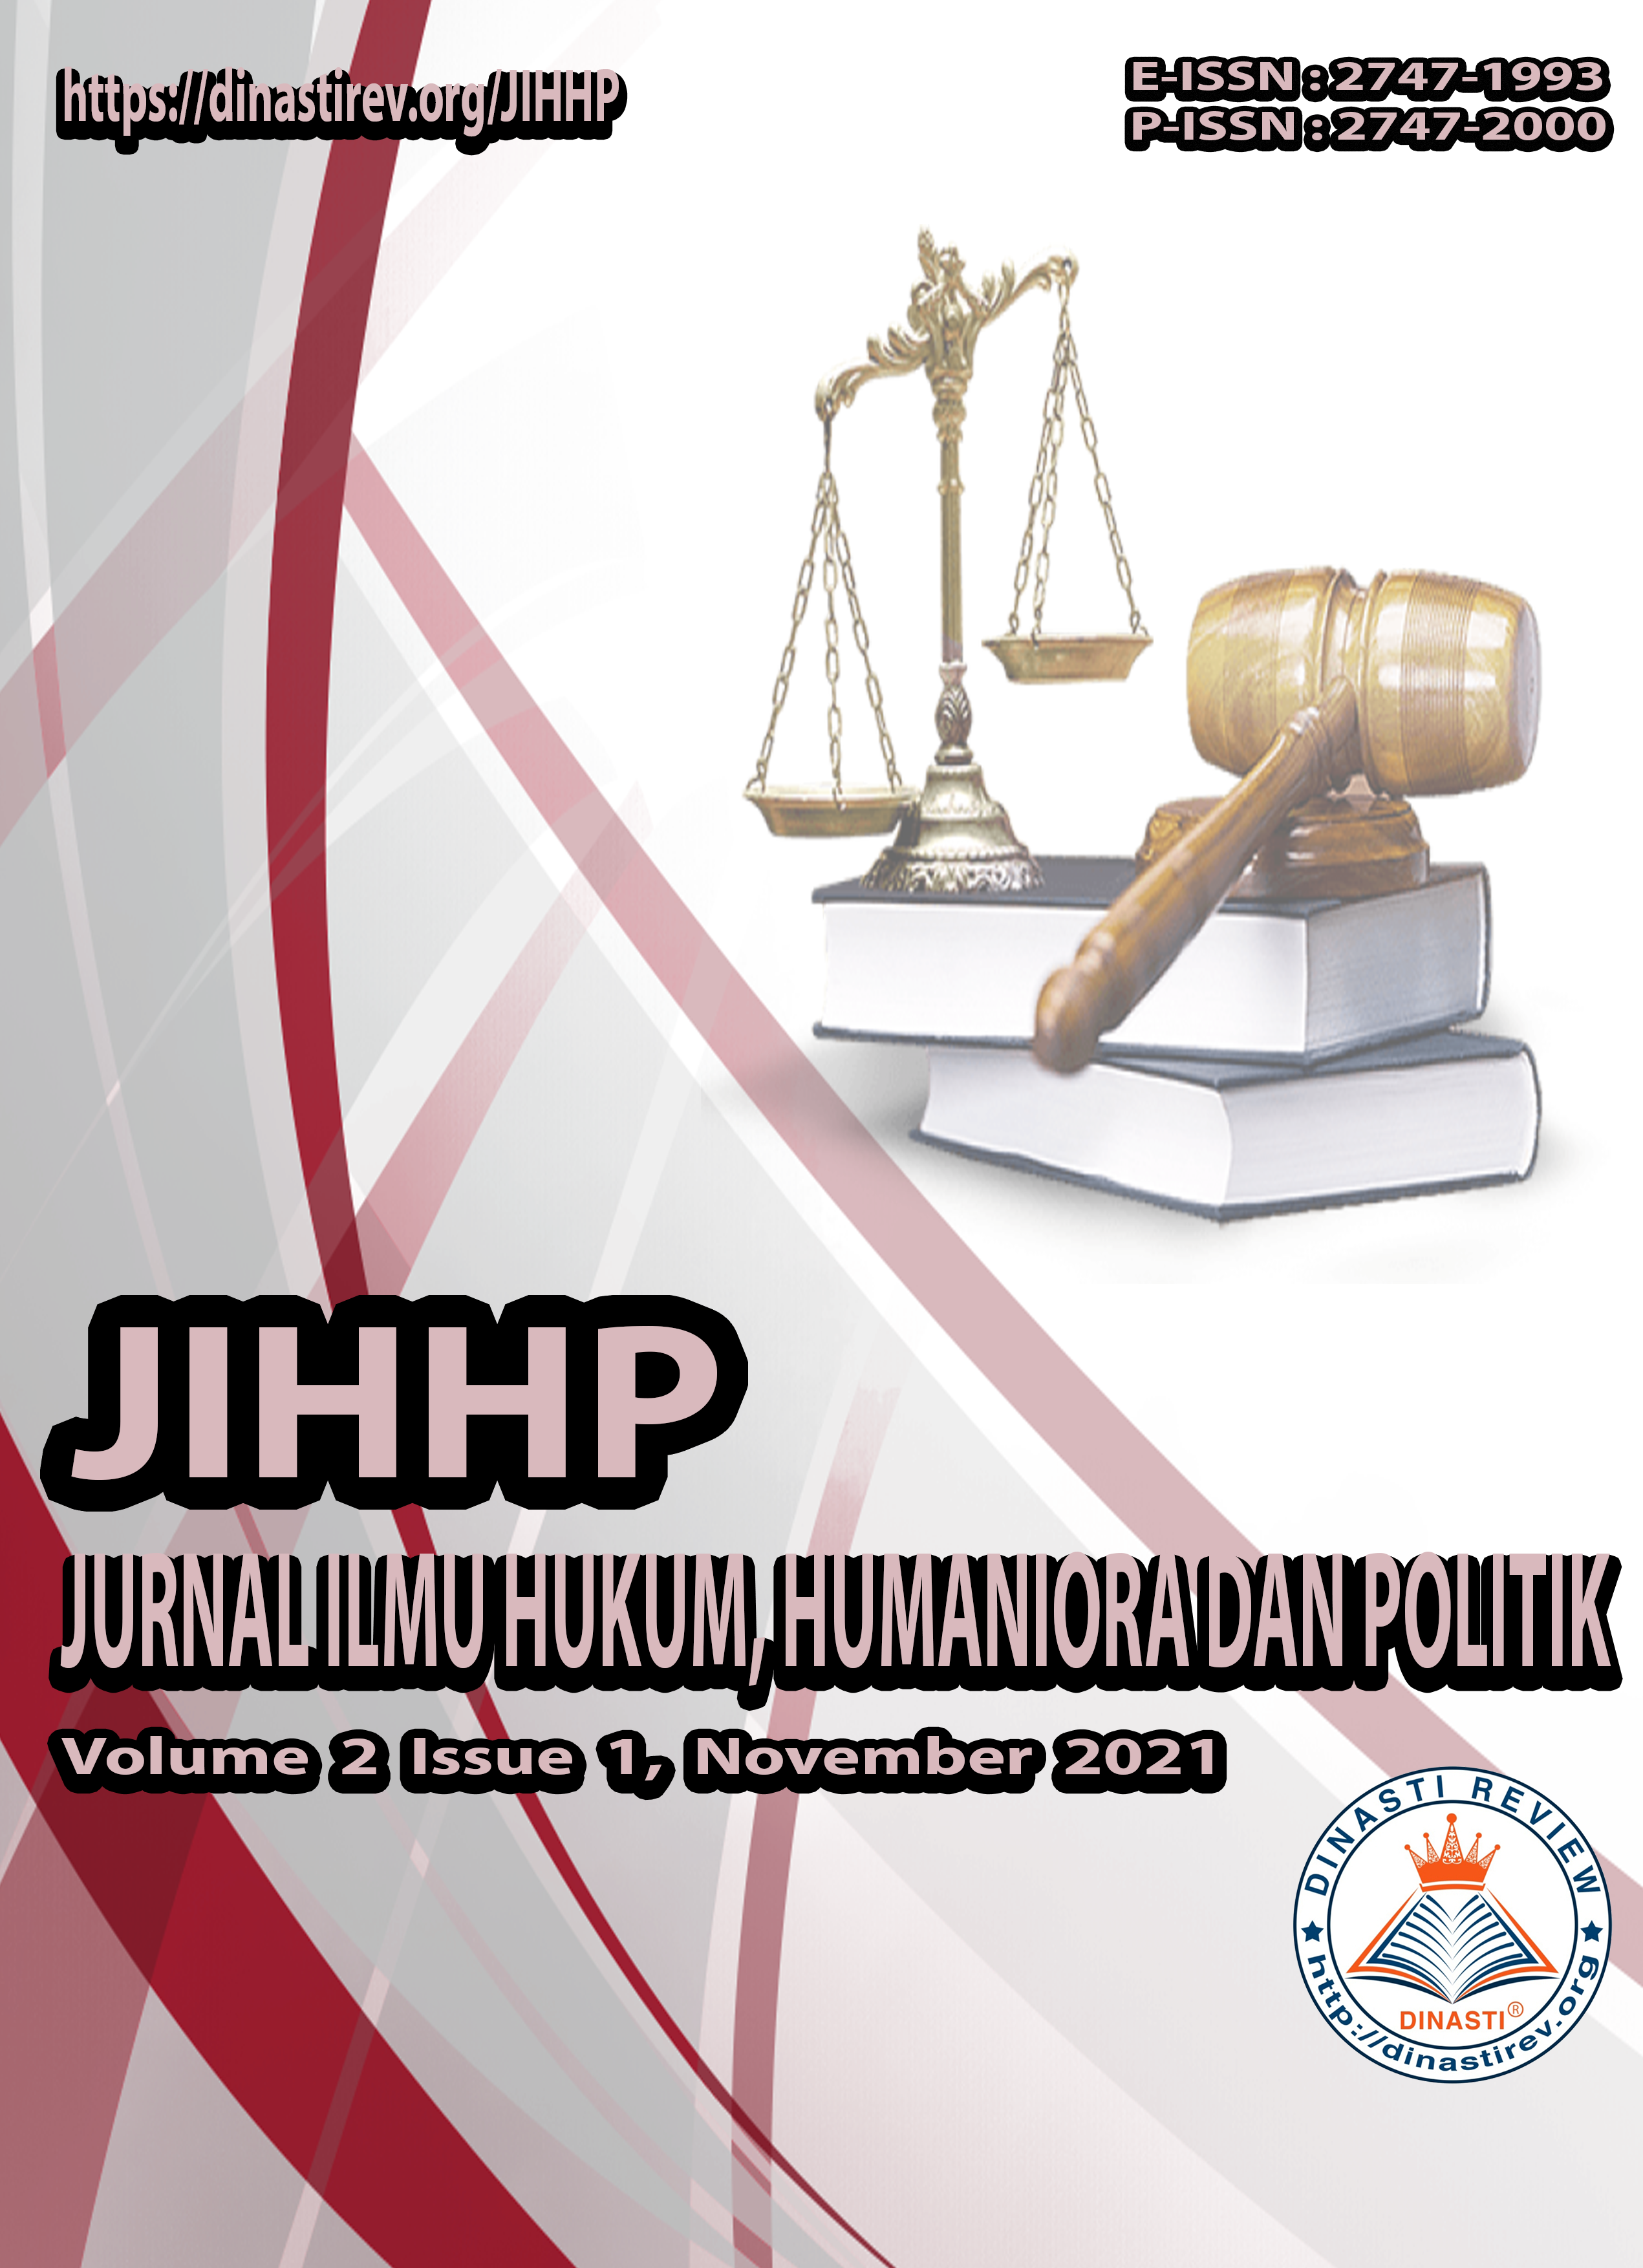 					View Vol. 2 No. 1 (2021): (JIHHP) Jurnal Ilmu Hukum, Humaniora dan Politik (November 2021)
				